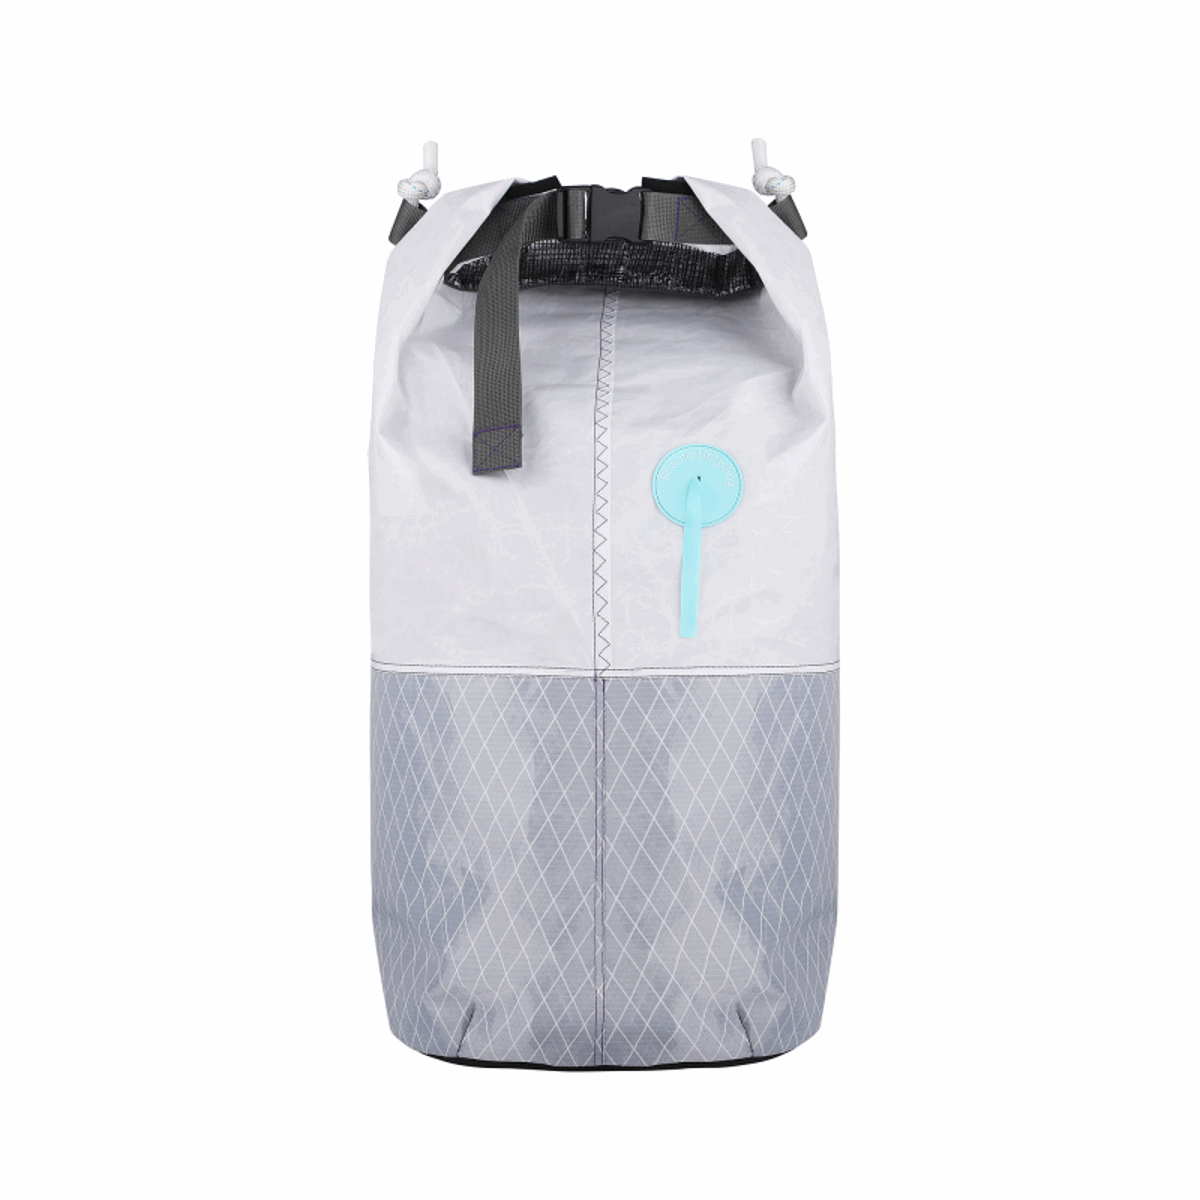 Lightweight roll-top backpack - waterproof backpack from REwind brand